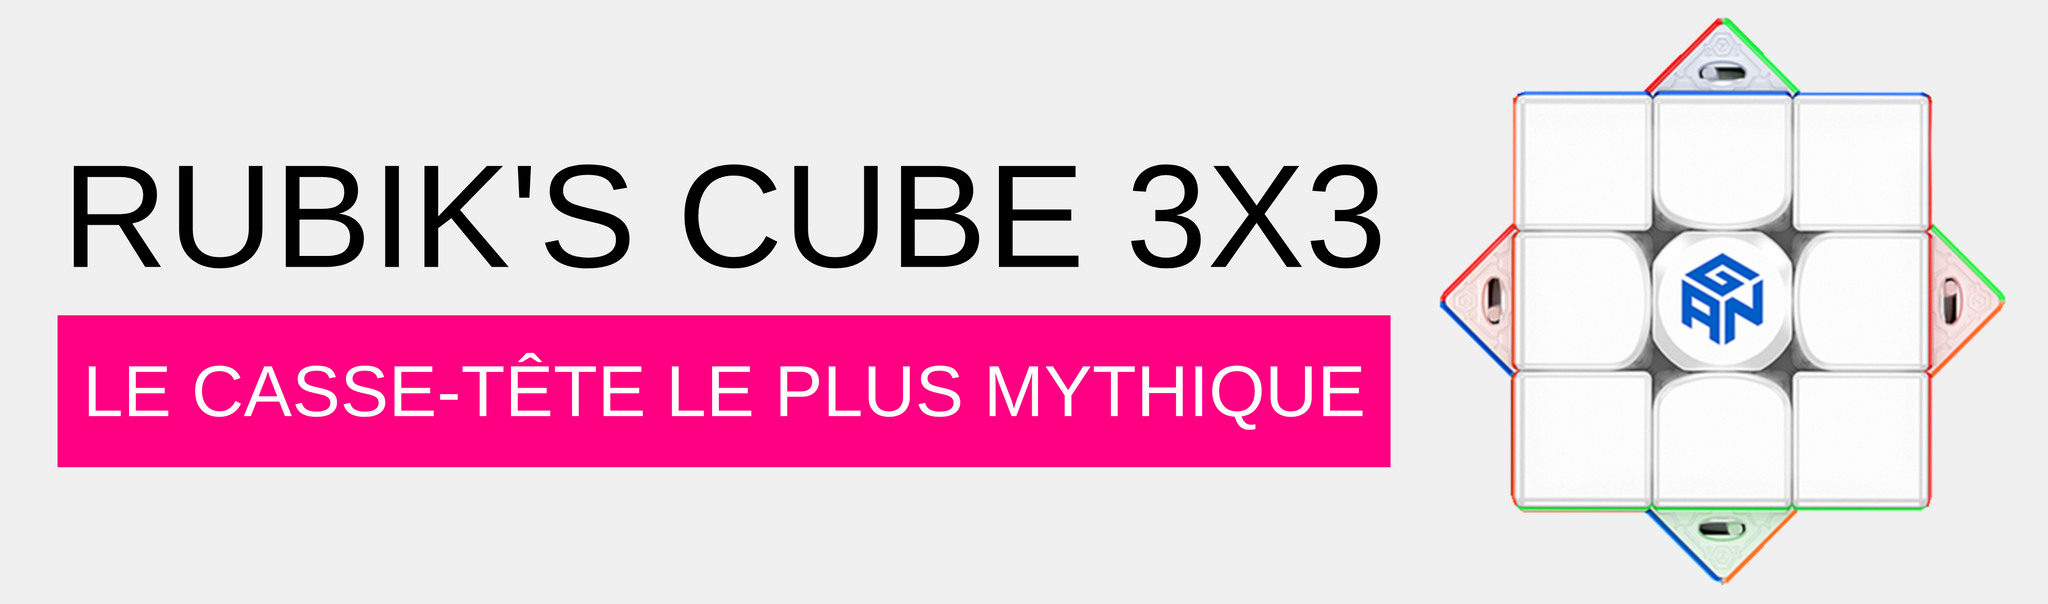 rubik's cube 3x3x3